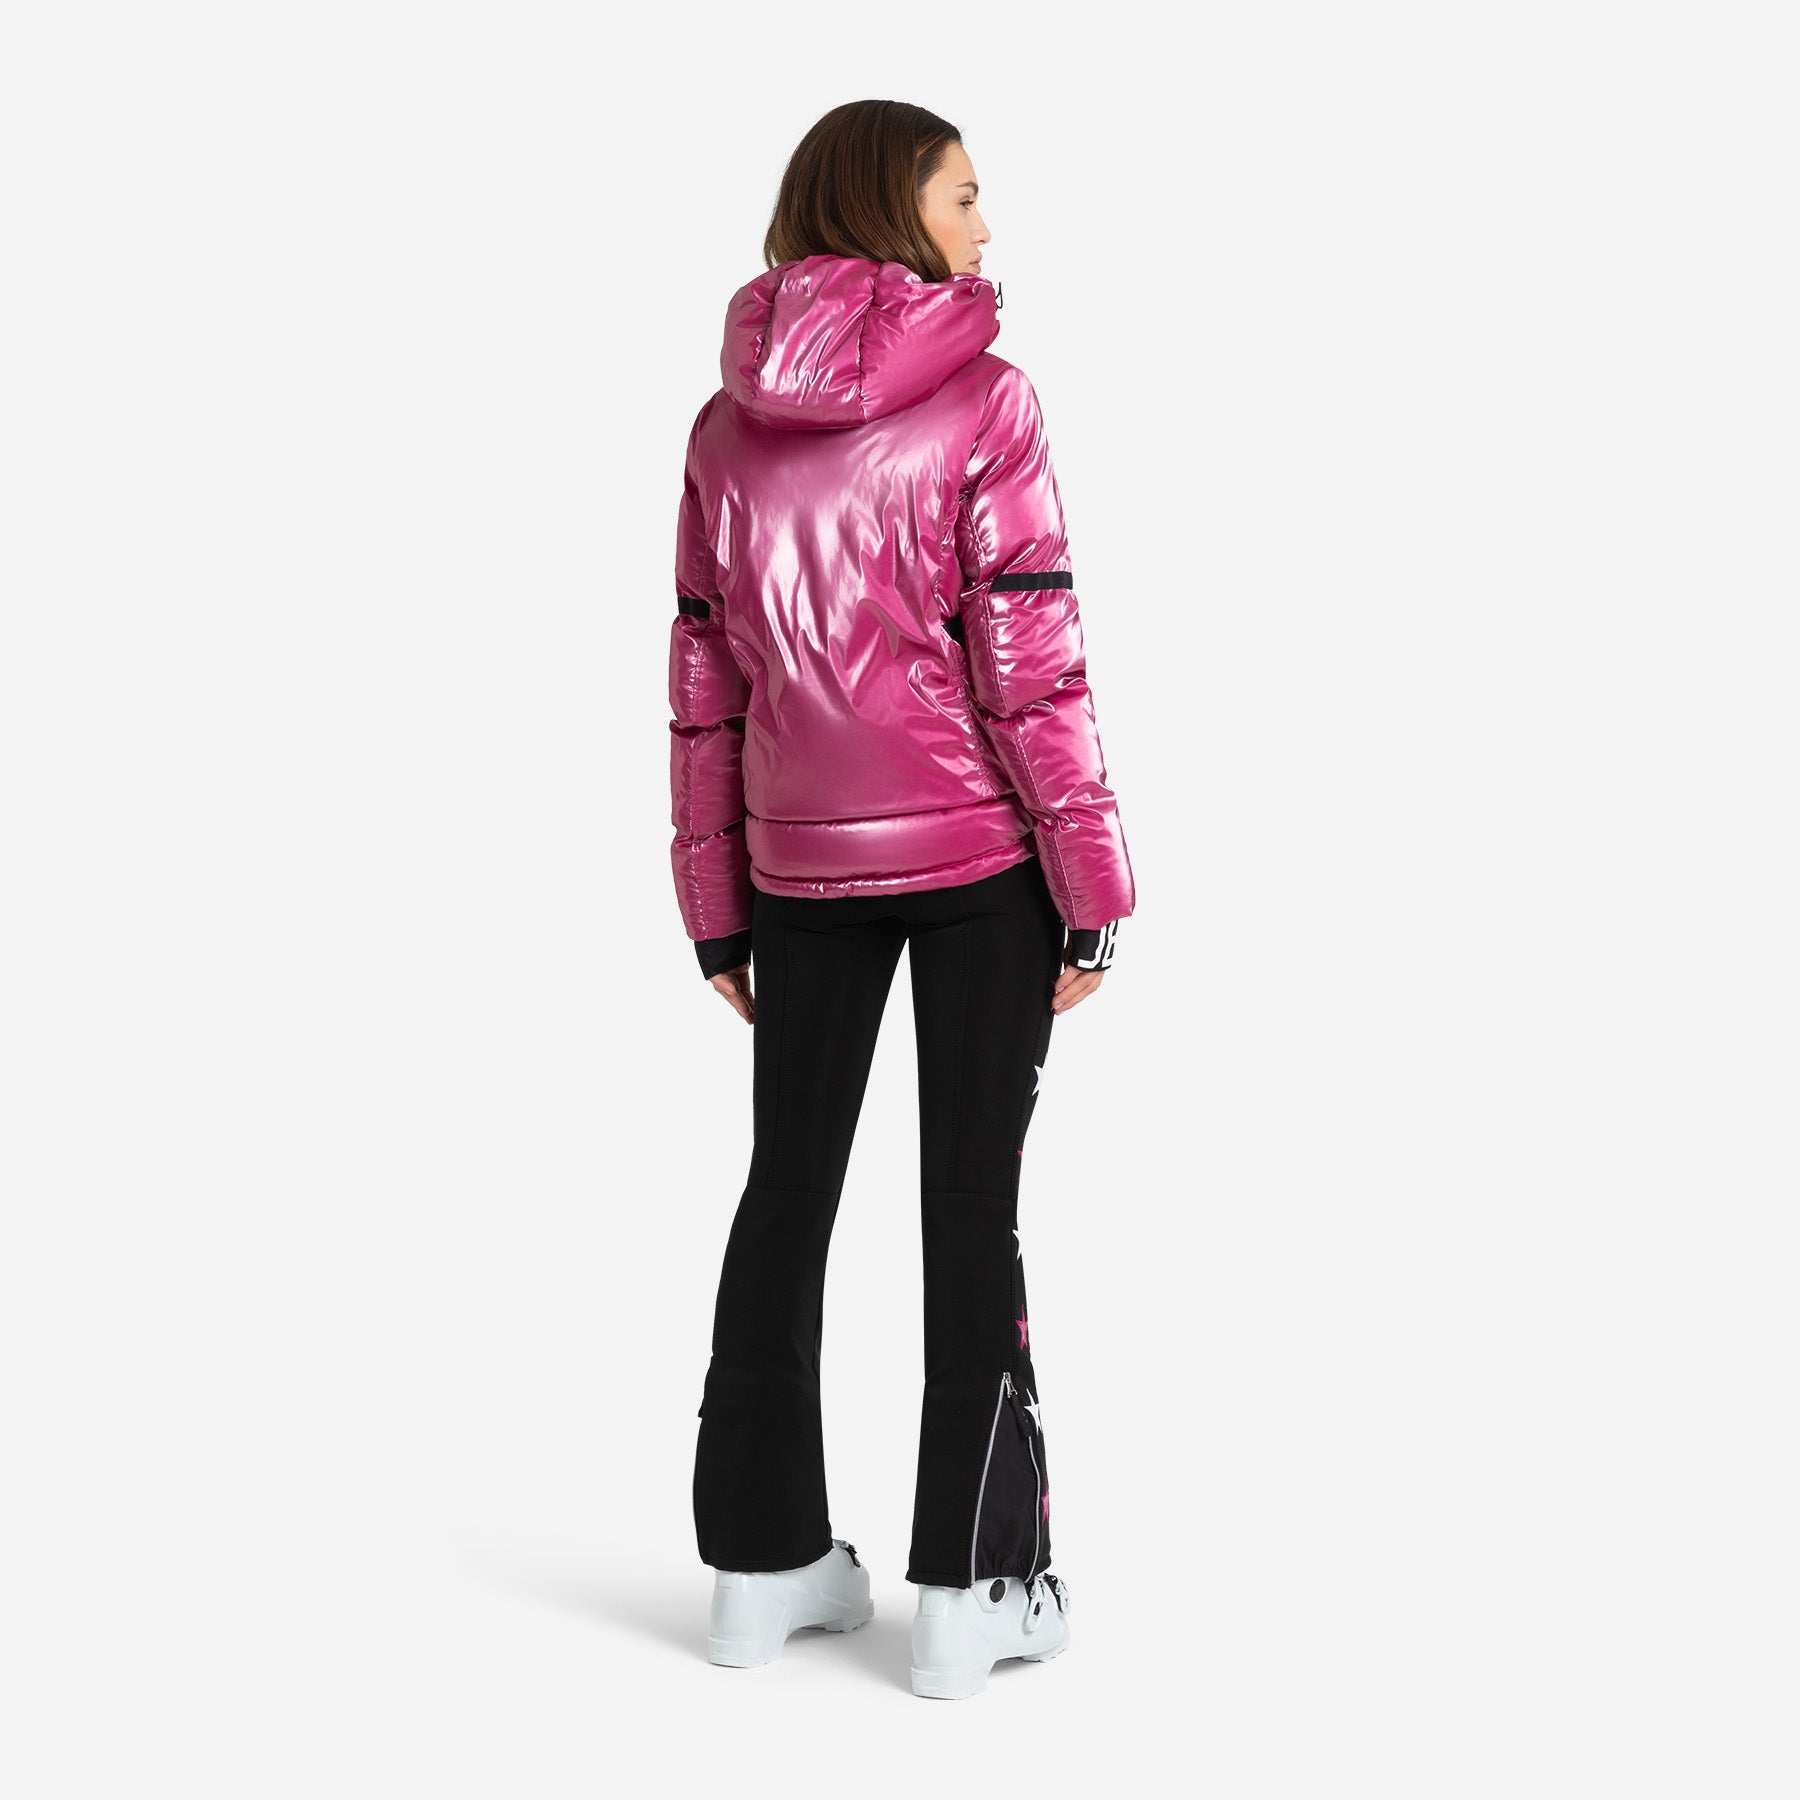 Joanna Ski Jacket Glam